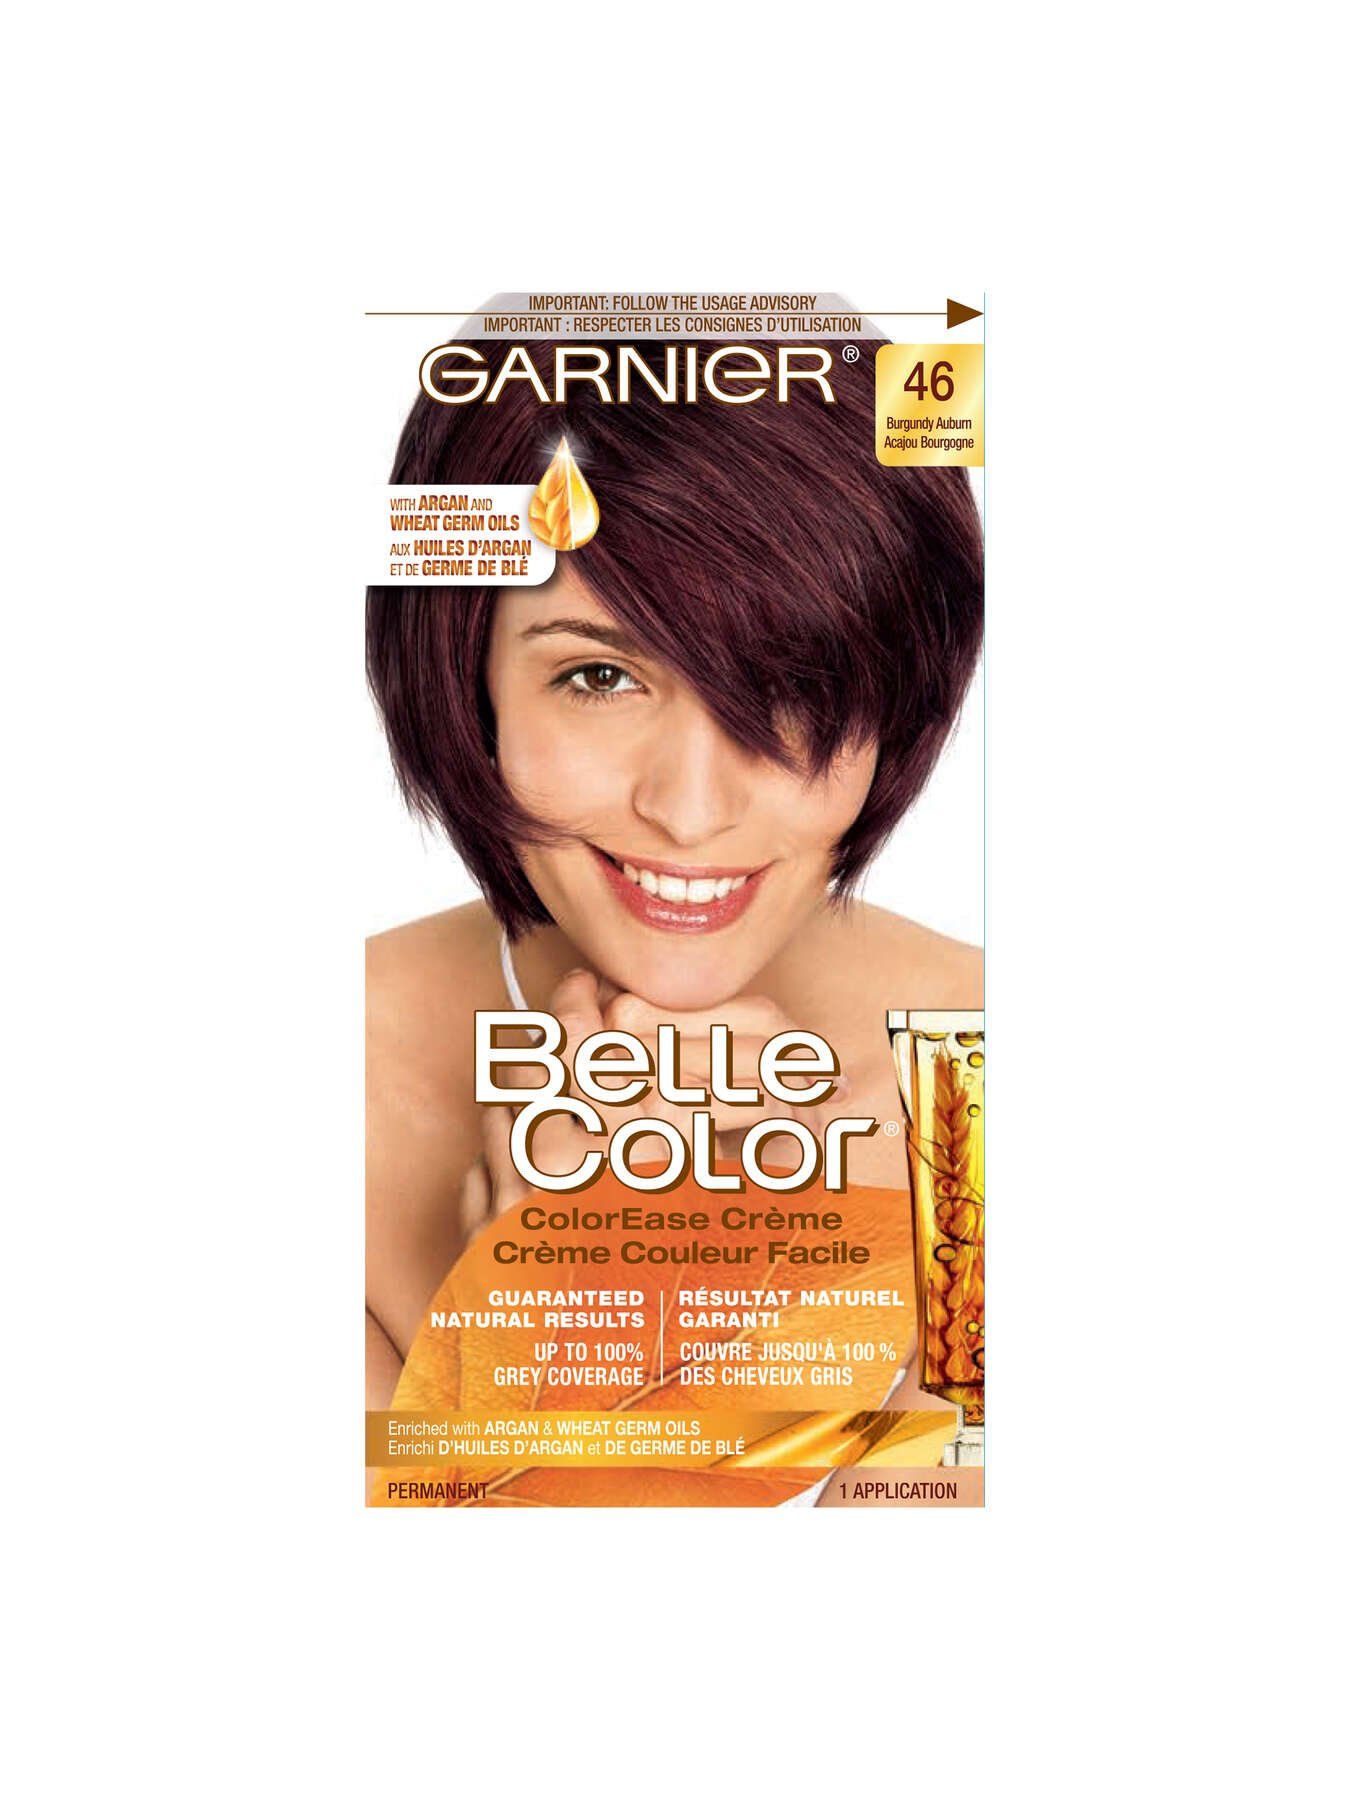 garnier hair dye belle color 46 burgundy auburn 70103160291 t1